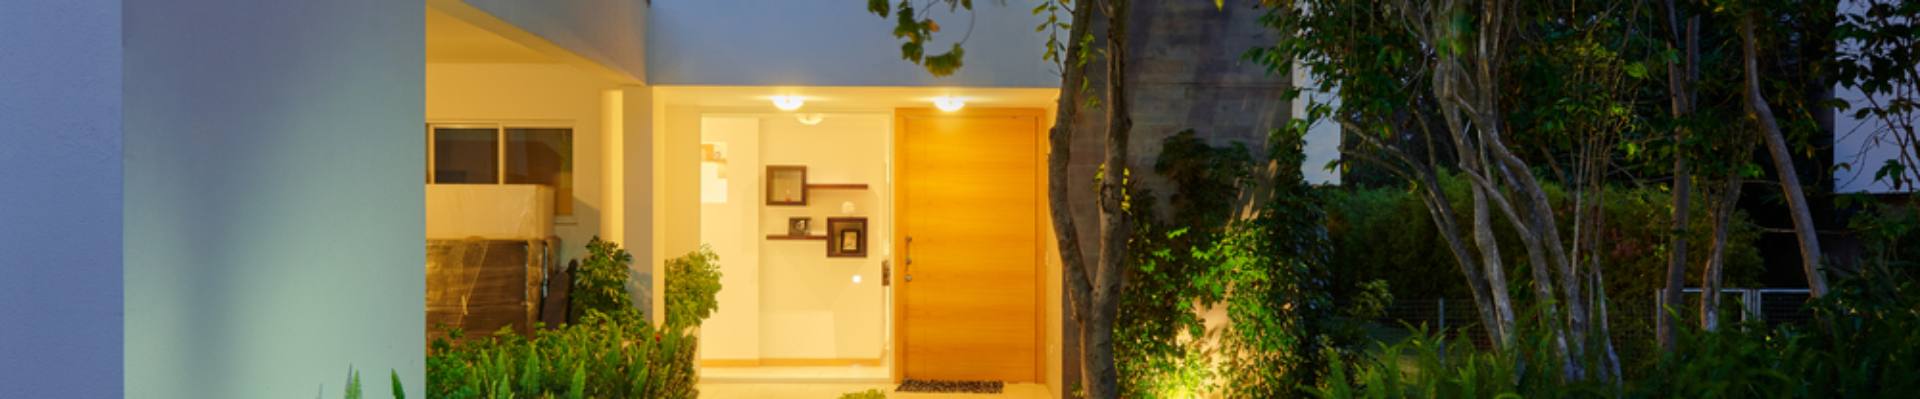 Six Modern Exterior Ideas Using Concrete For Your Dream Home